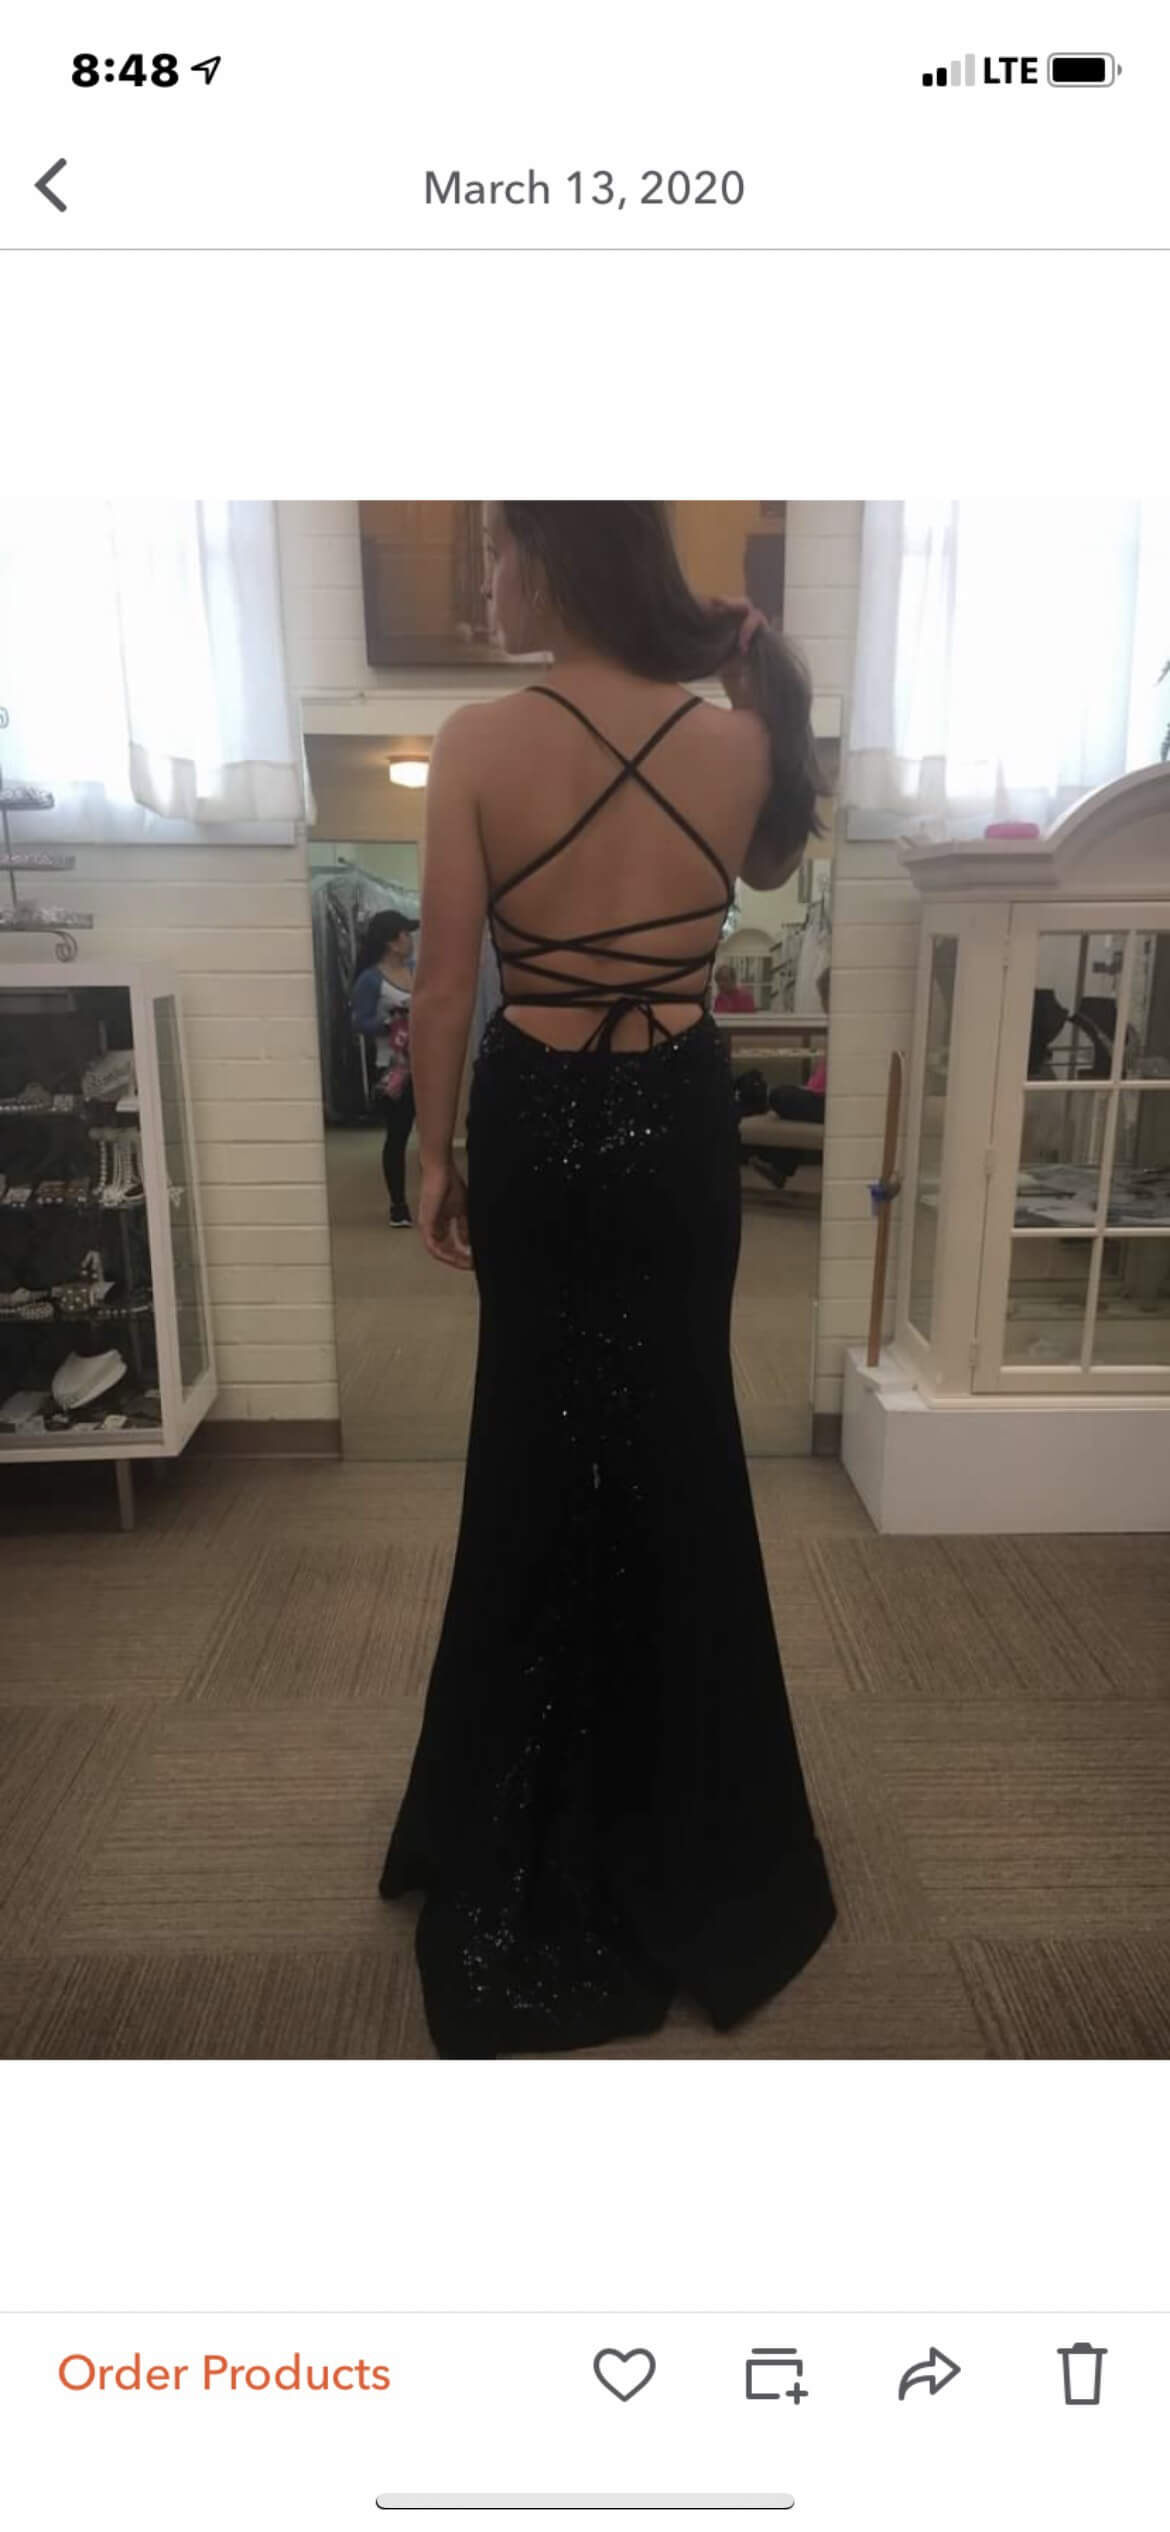 MoriLee Size 4 Prom Black Mermaid Dress on Queenly